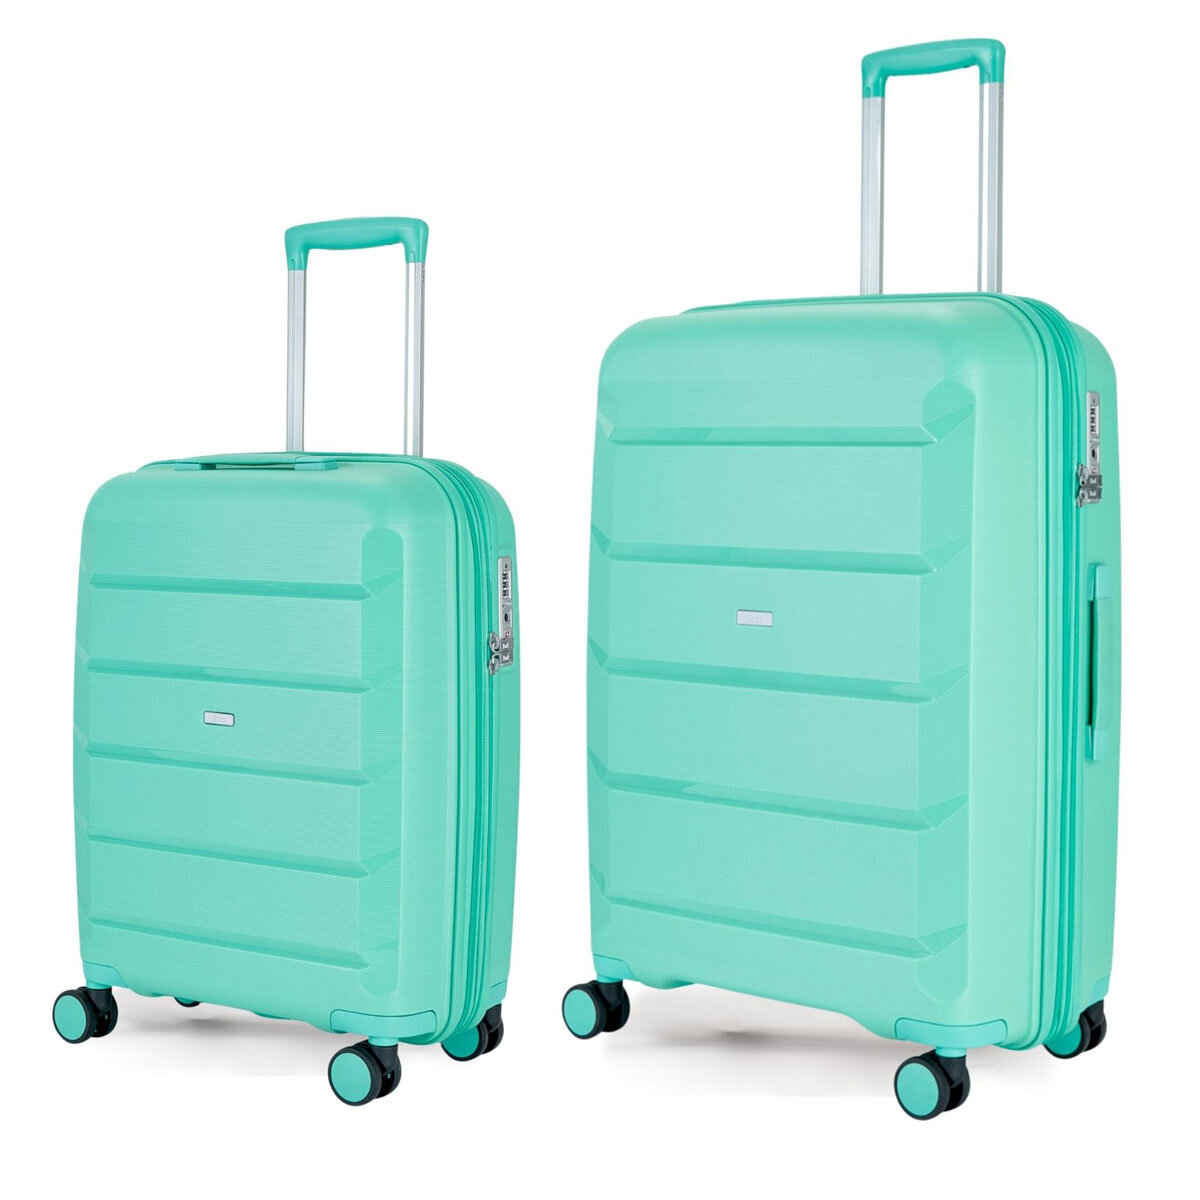 Rock Tulum 2 Piece Hardside Luggage Set in Turquoise | Co...